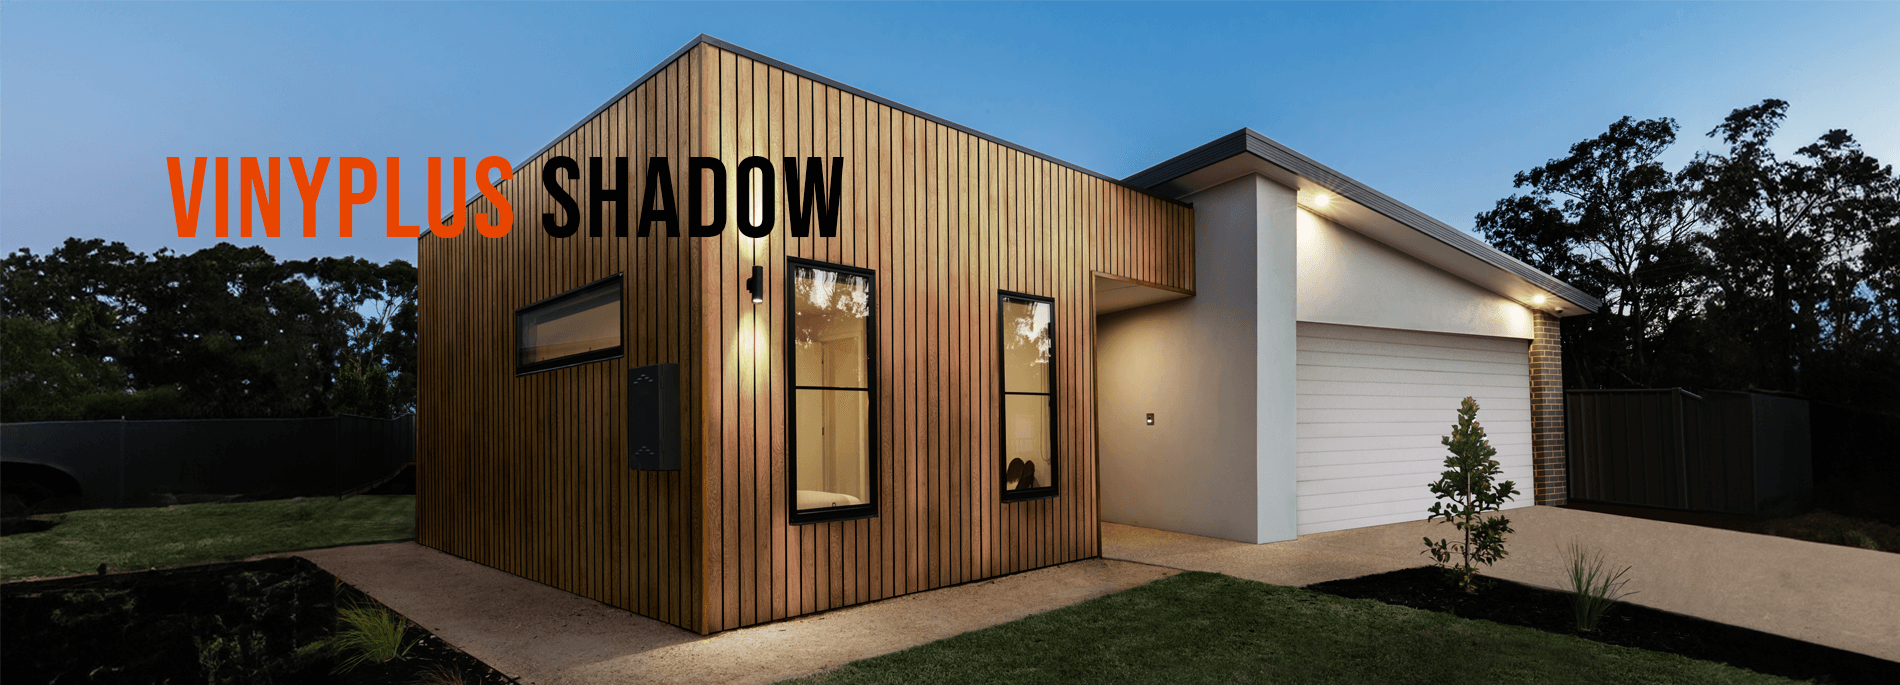 VinyPlus Fassade Shadow aus Kunststoff in Holzoptik